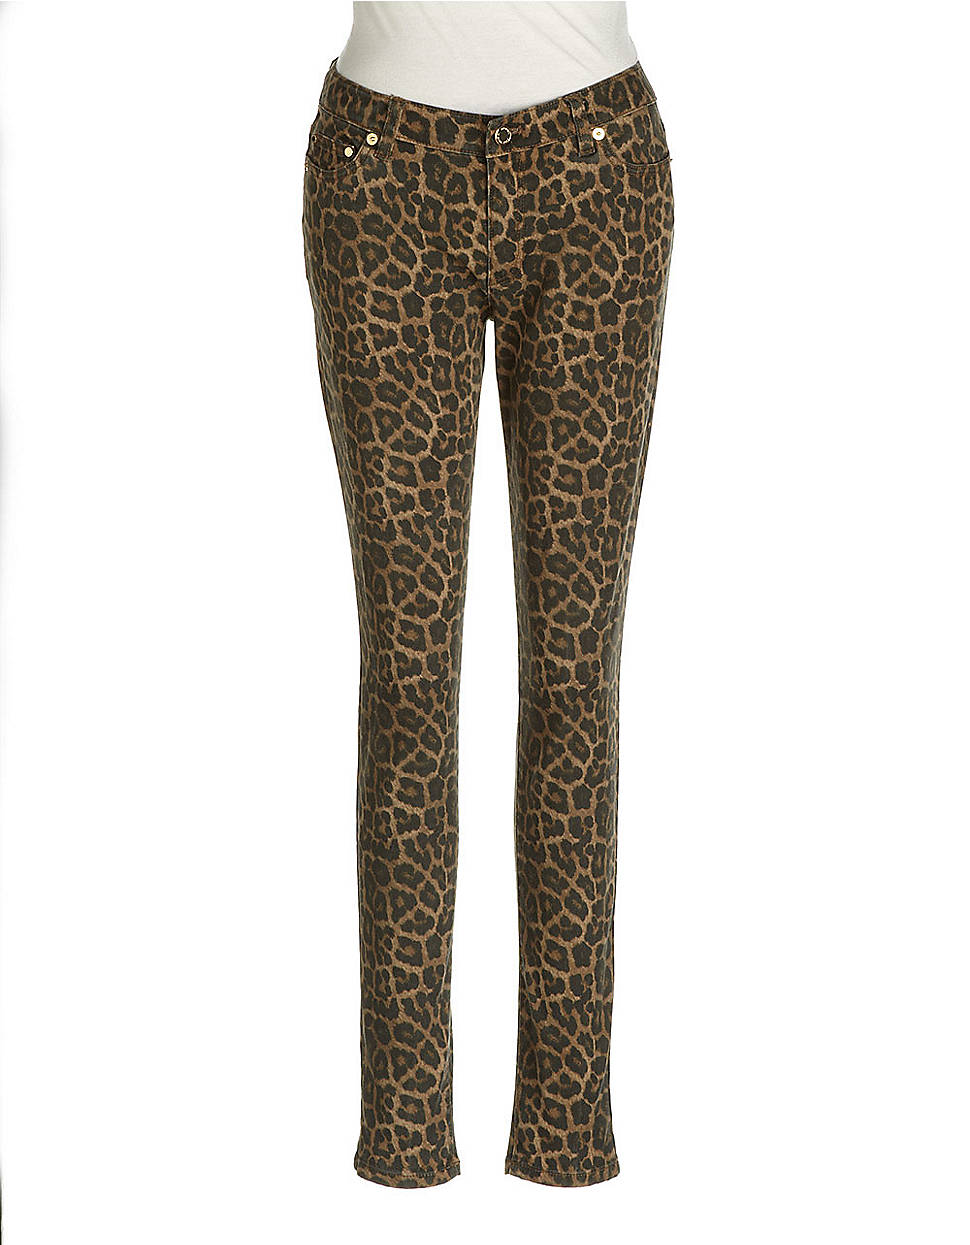 Michael michael kors Plus Leopard Print Skinny Pants in Animal | Lyst